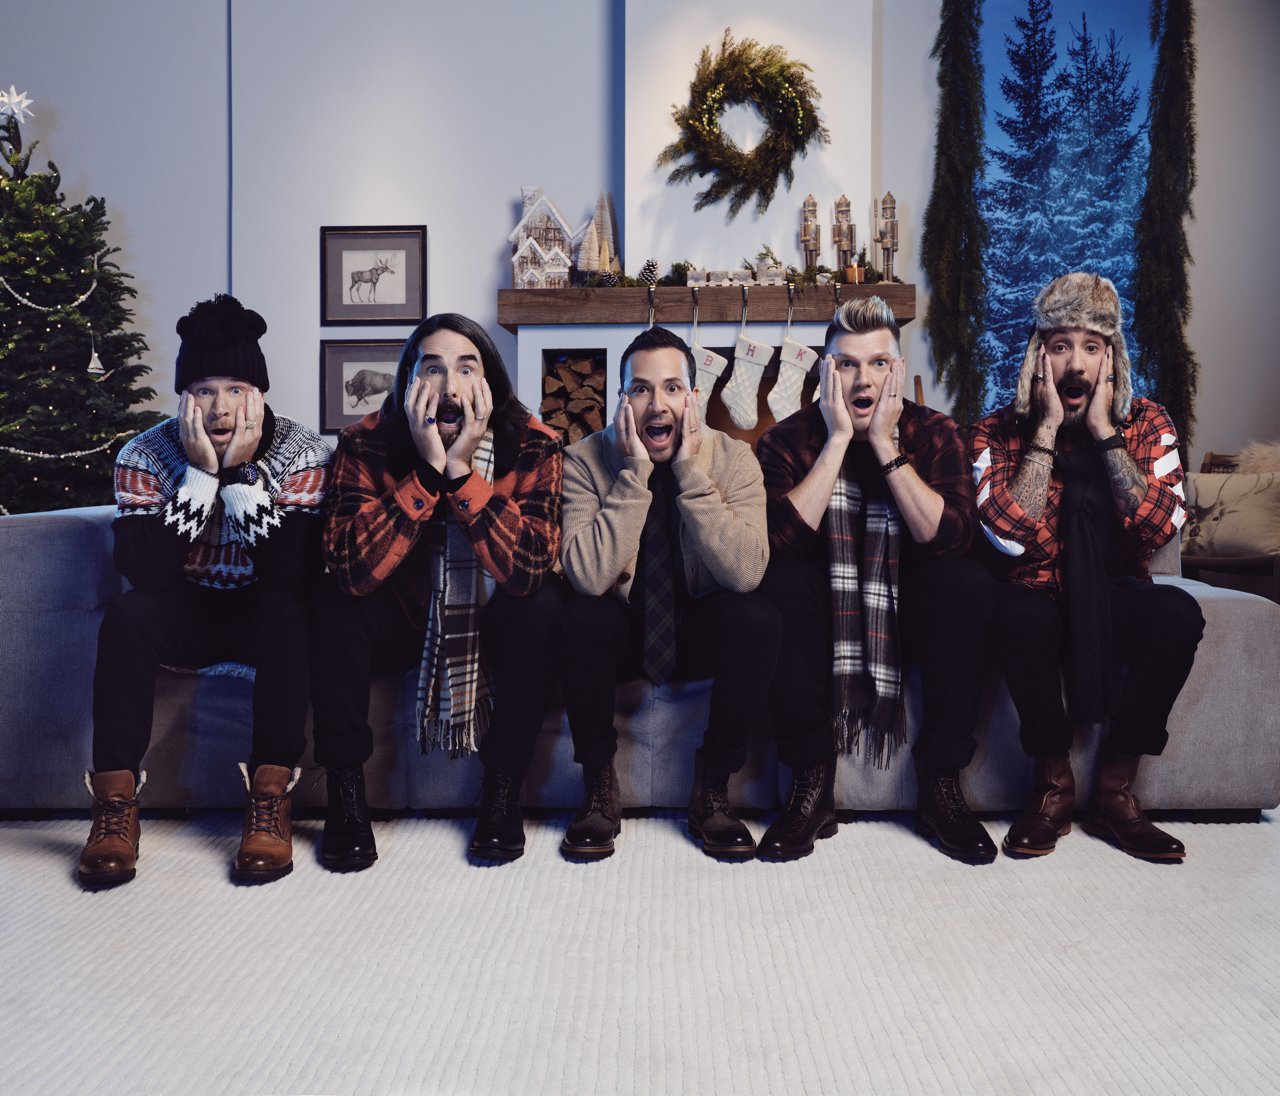 A Very Backstreet Christmas Album Ornament – Backstreet Boys